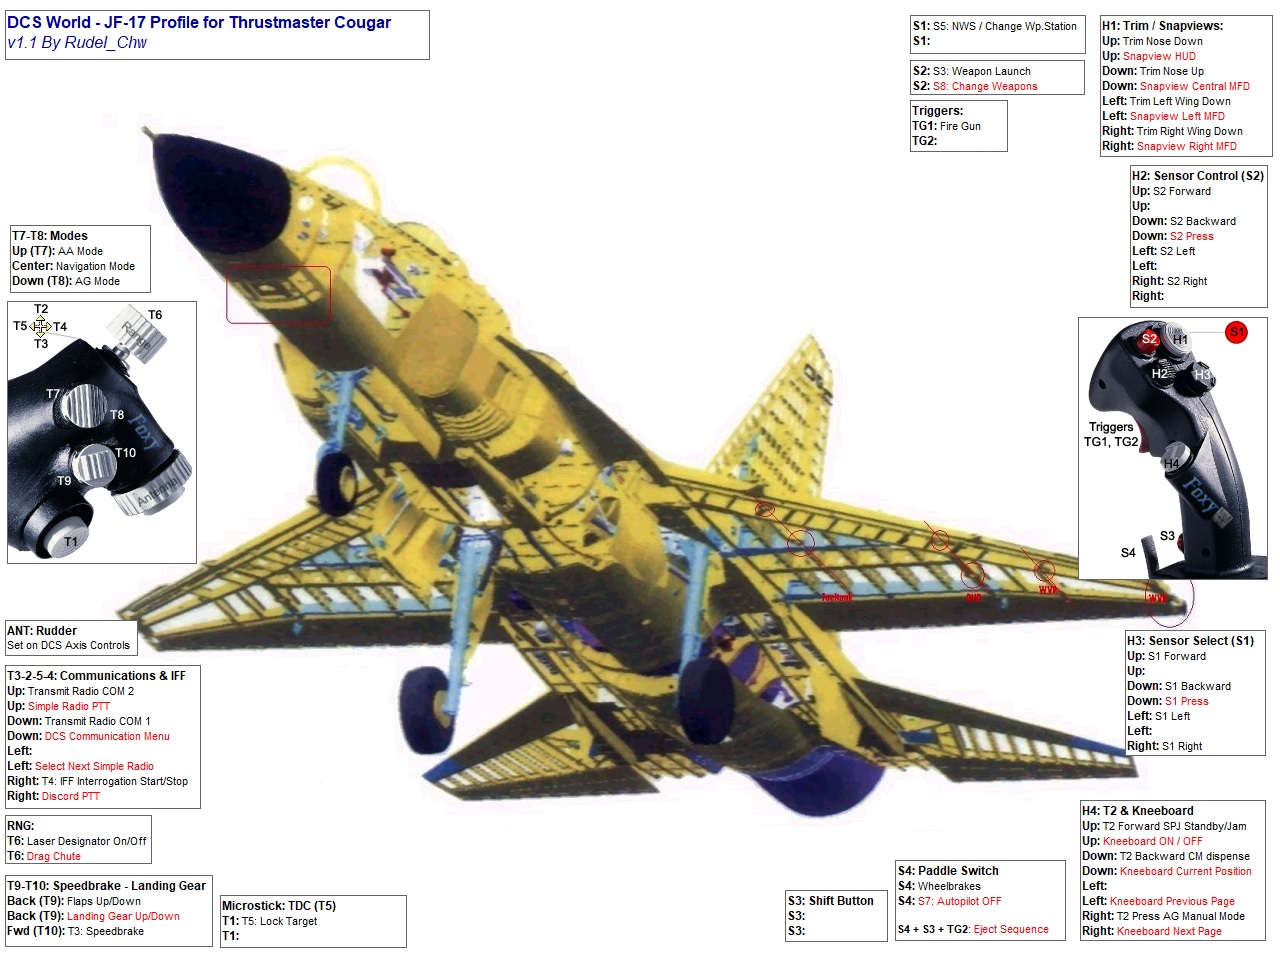 TM Hotas Cougar profile for DCS JF-17